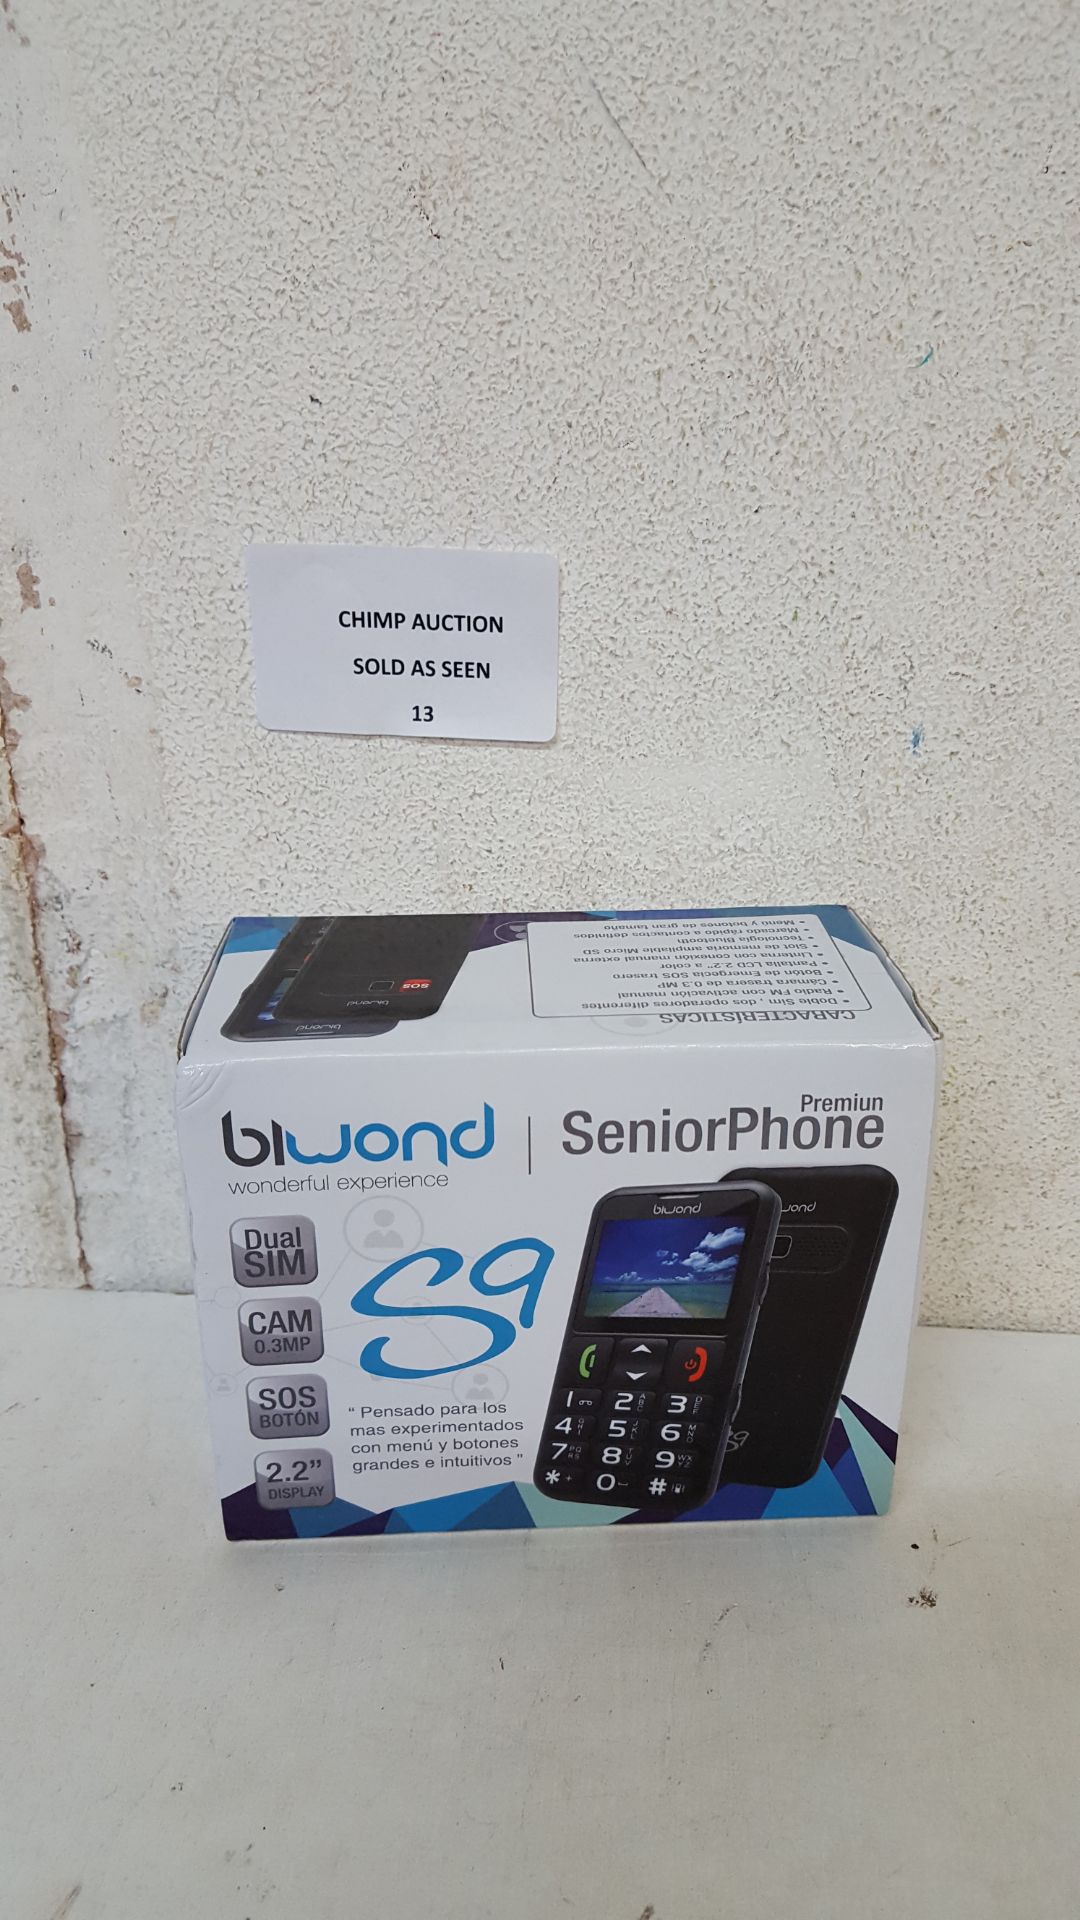 BRAND NEW BIWOND S9 SENIOR PHONE PREMIUM DUAL SIM MOBILE PHONE/ SIM FREE RRP £89.99/